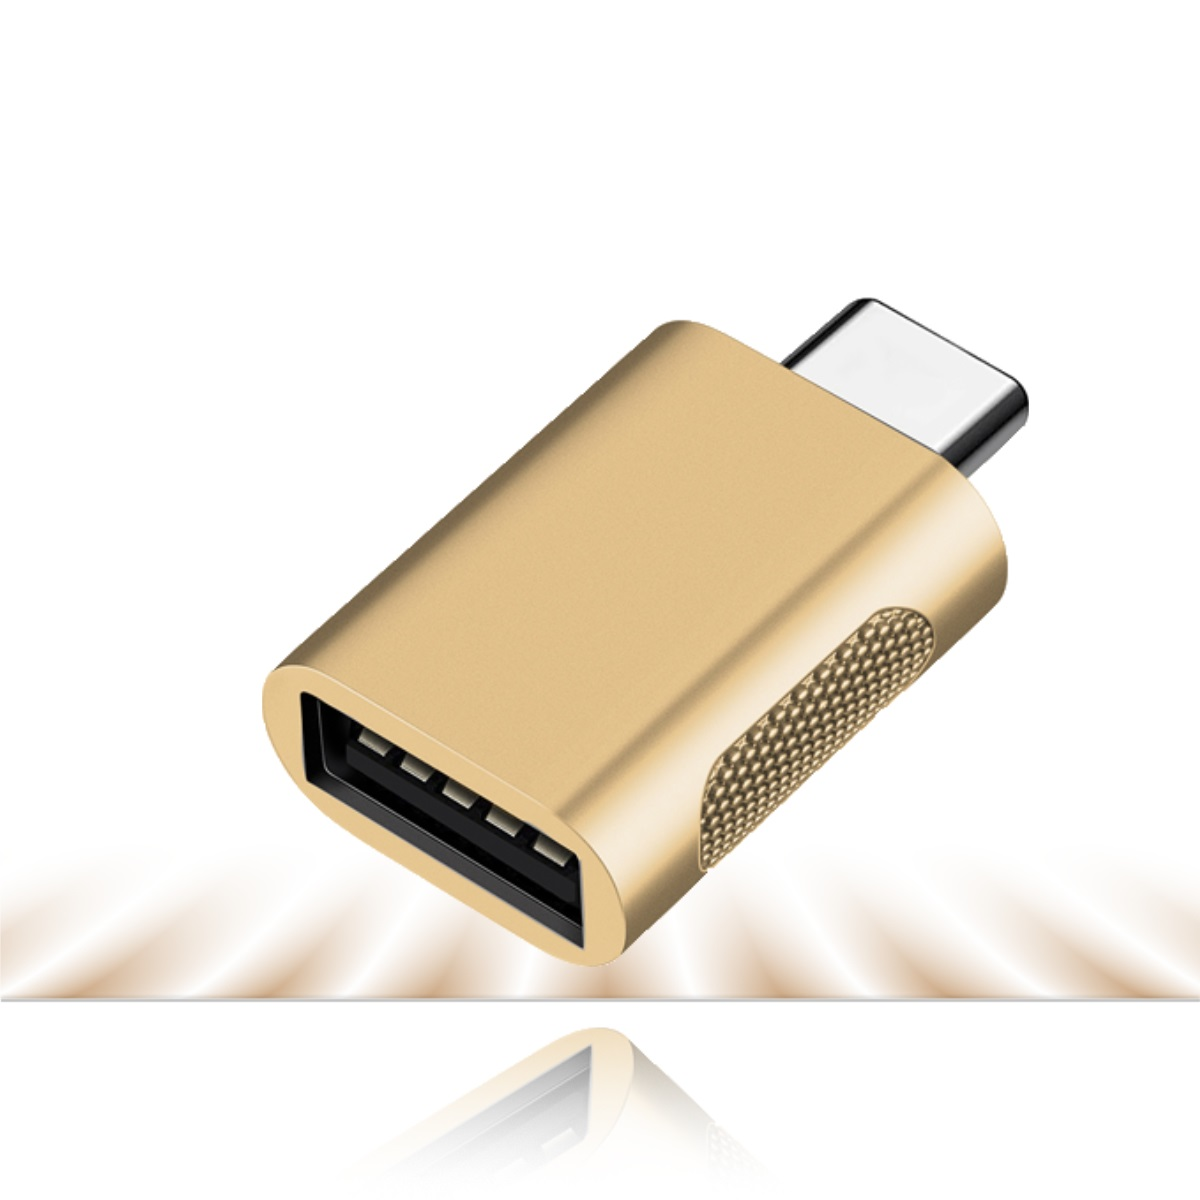 USB CRADYS Adapter Gold gold C USB zu Adapter,